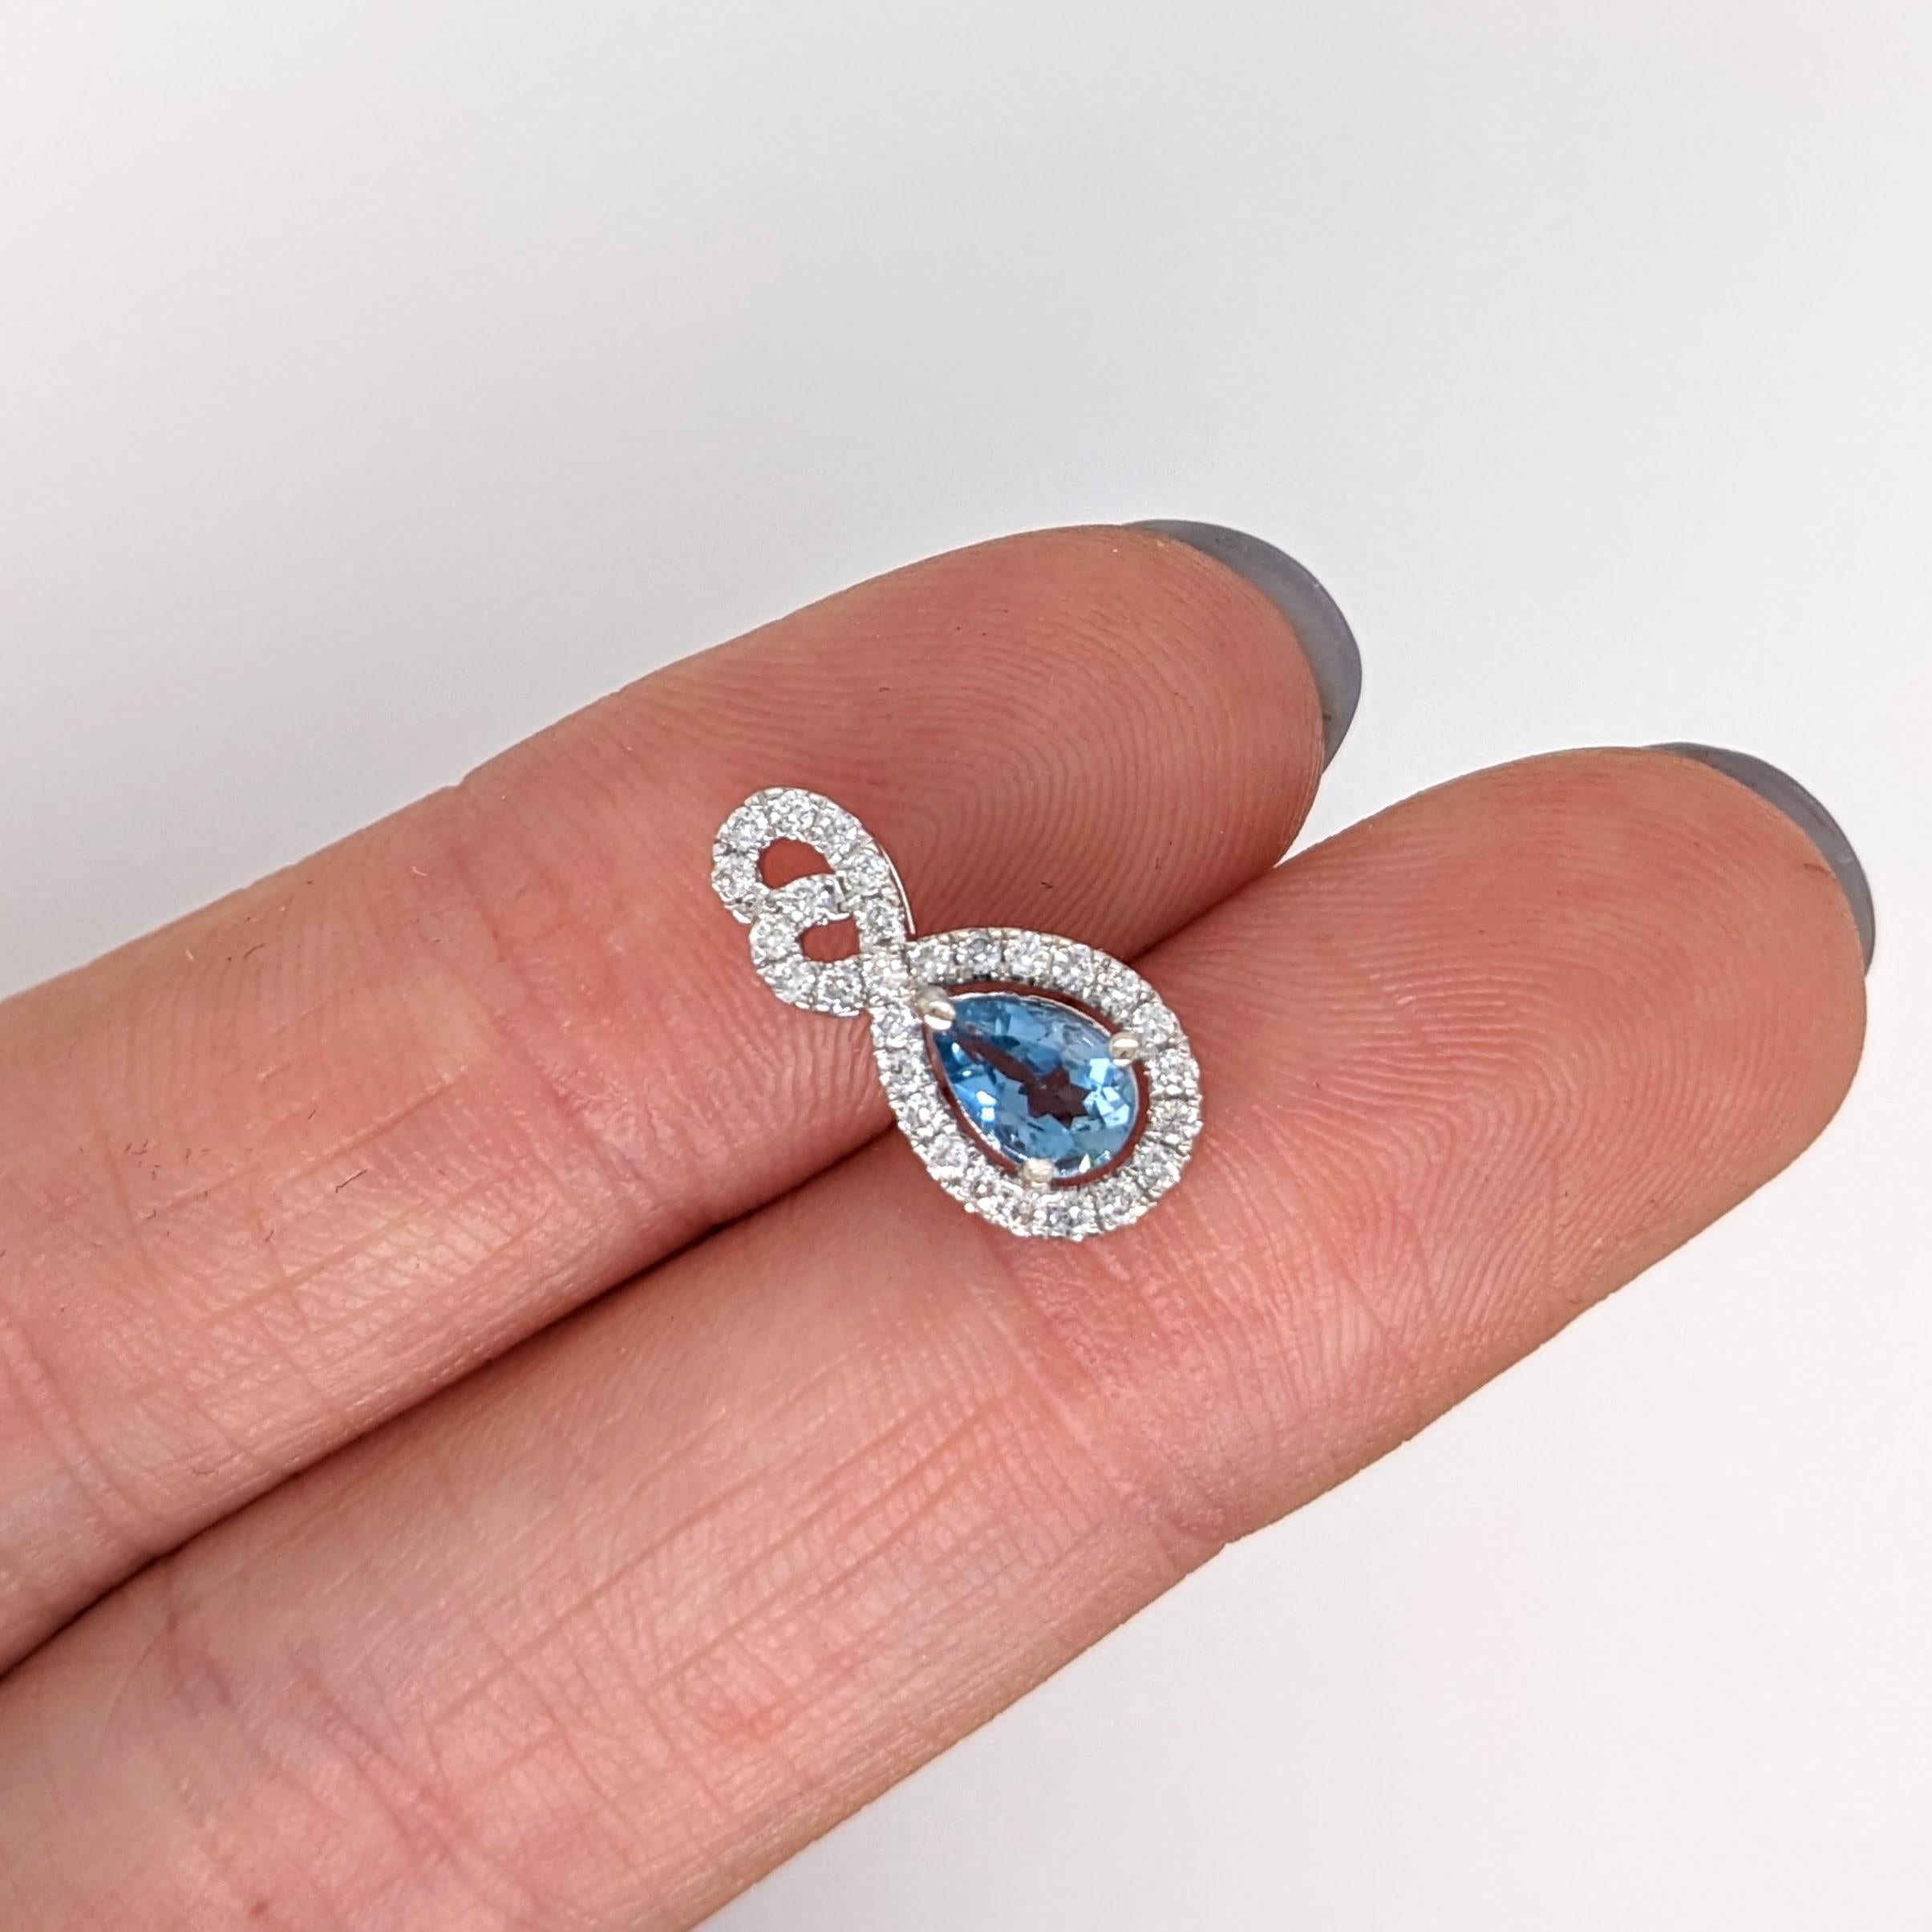 Aquamarine Pendant w Earth Mined Diamonds in Solid 14K White Gold Pear Shape 6x4